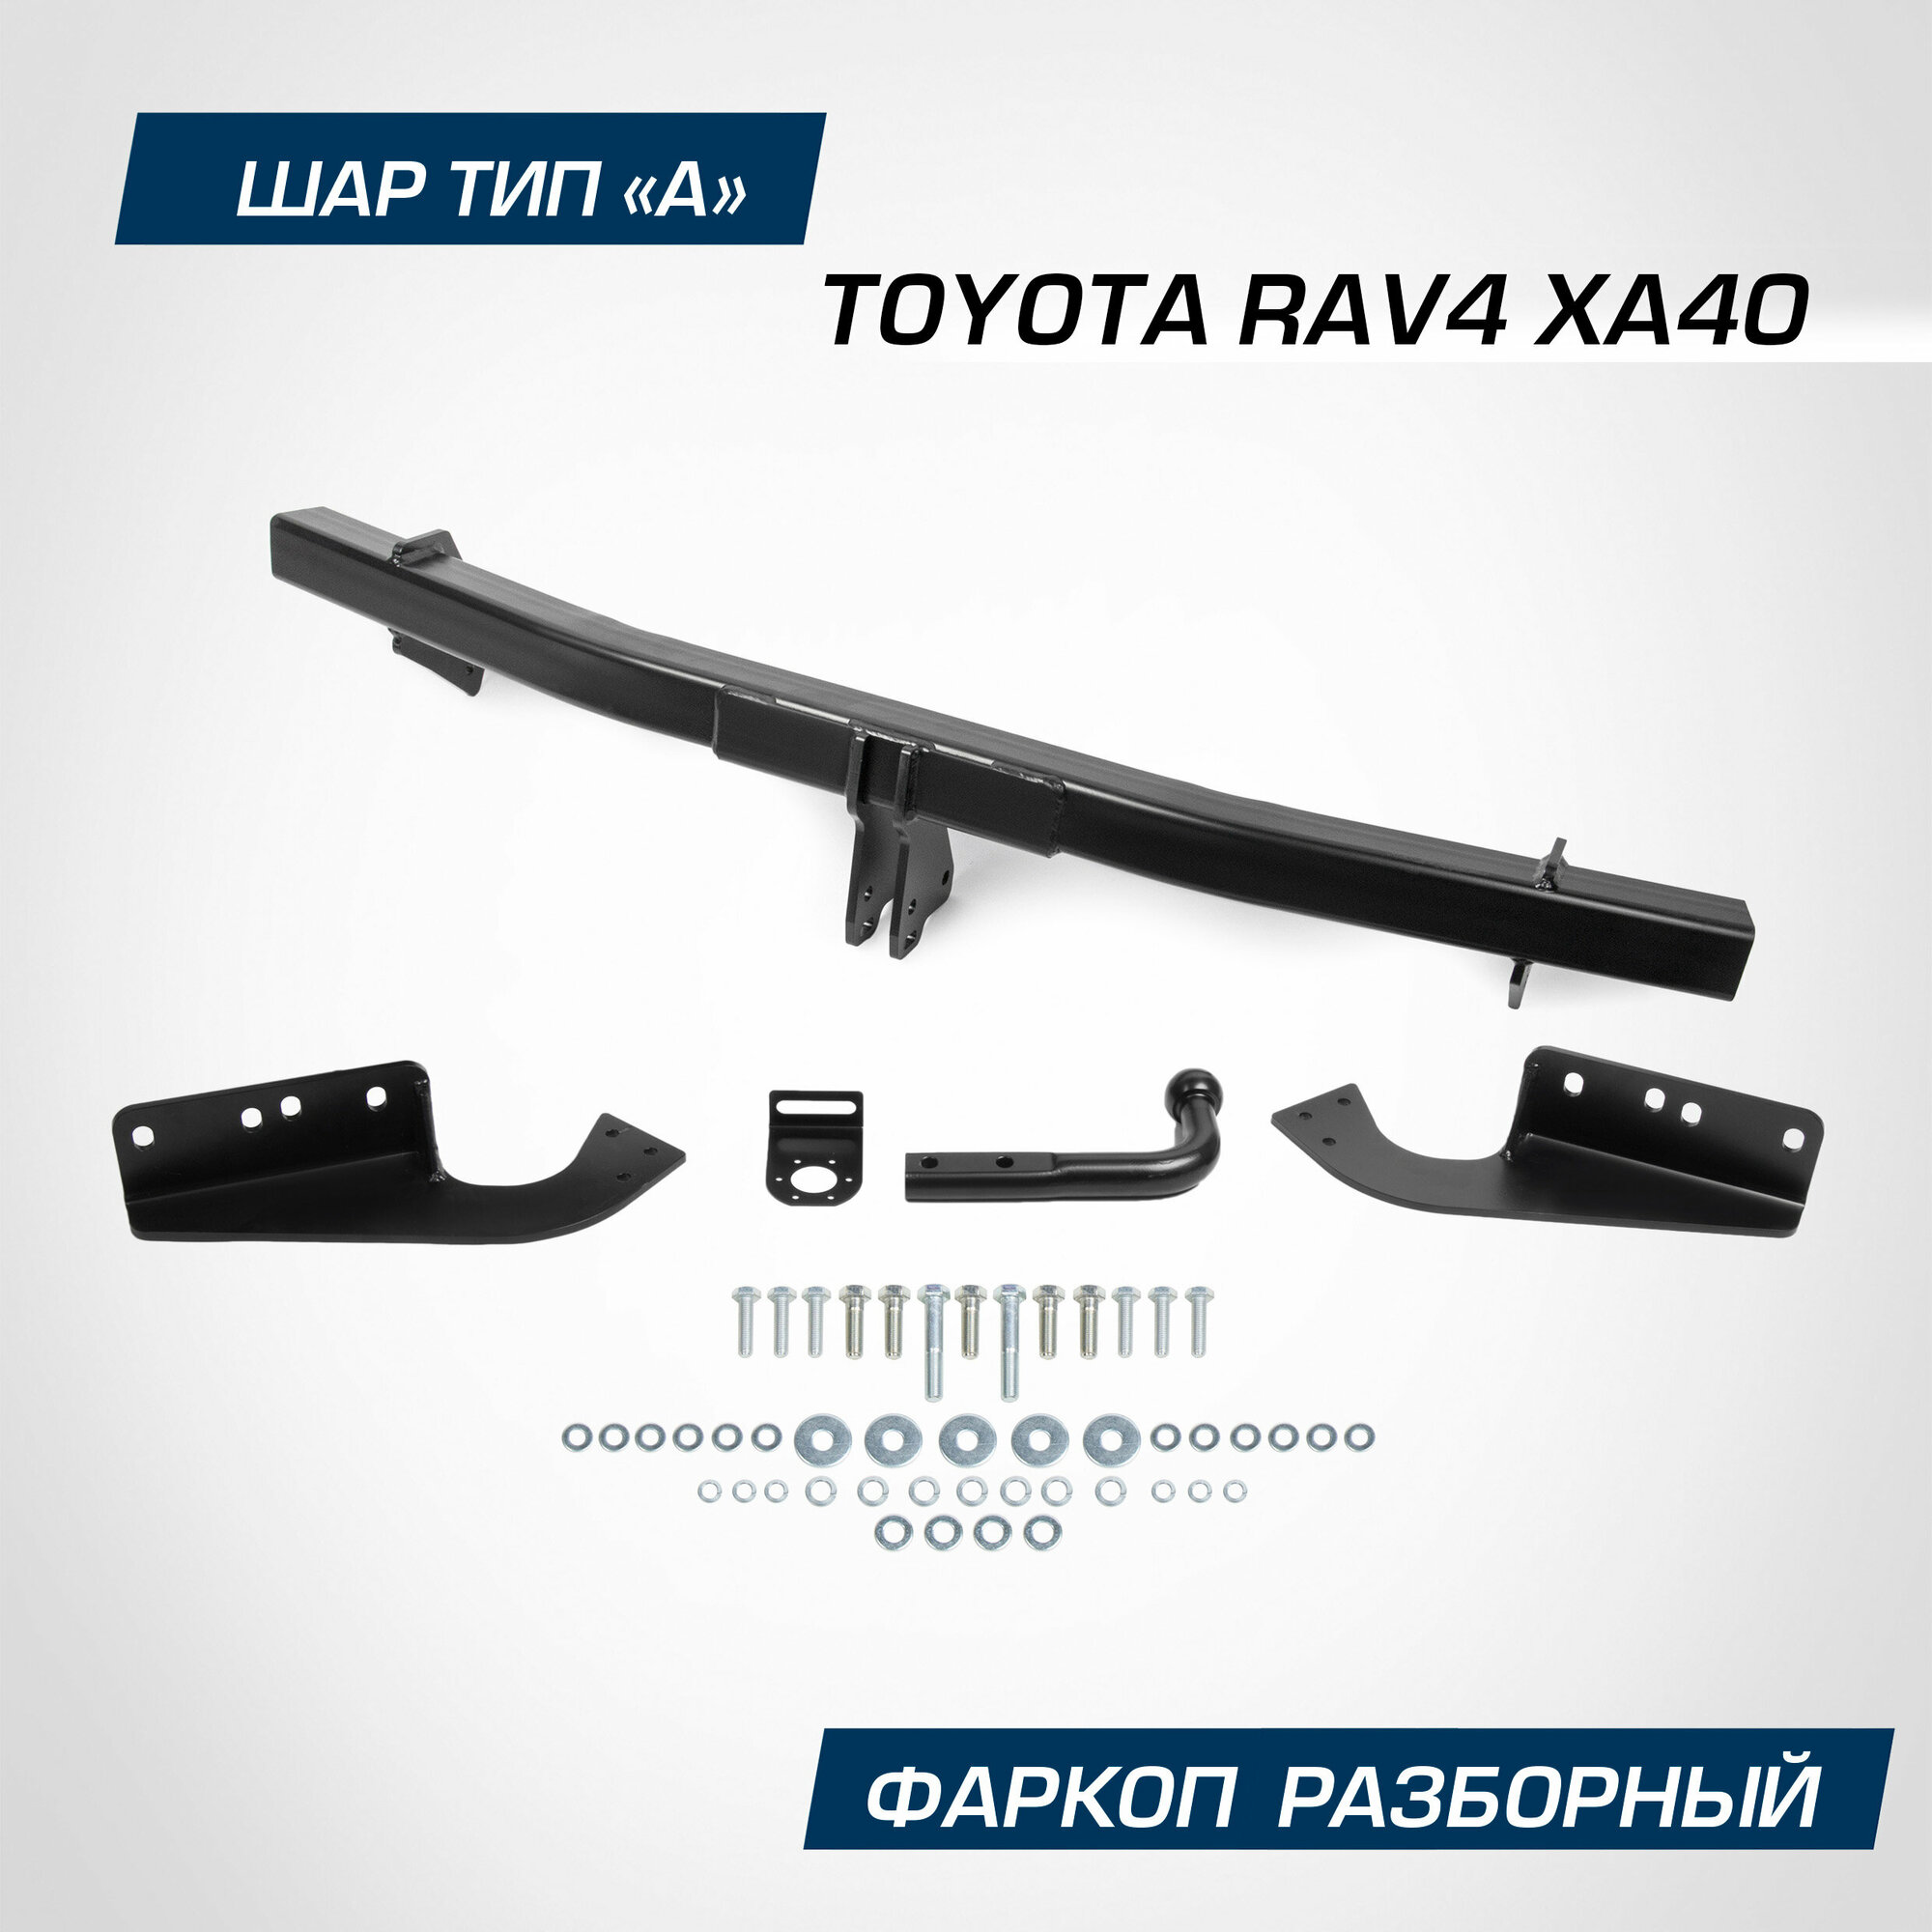 Фаркоп Berg для Toyota RAV4 (Тойота РАВ 4) CA40 2012-2019, шар A, 1200/75 кг, F.5711.001